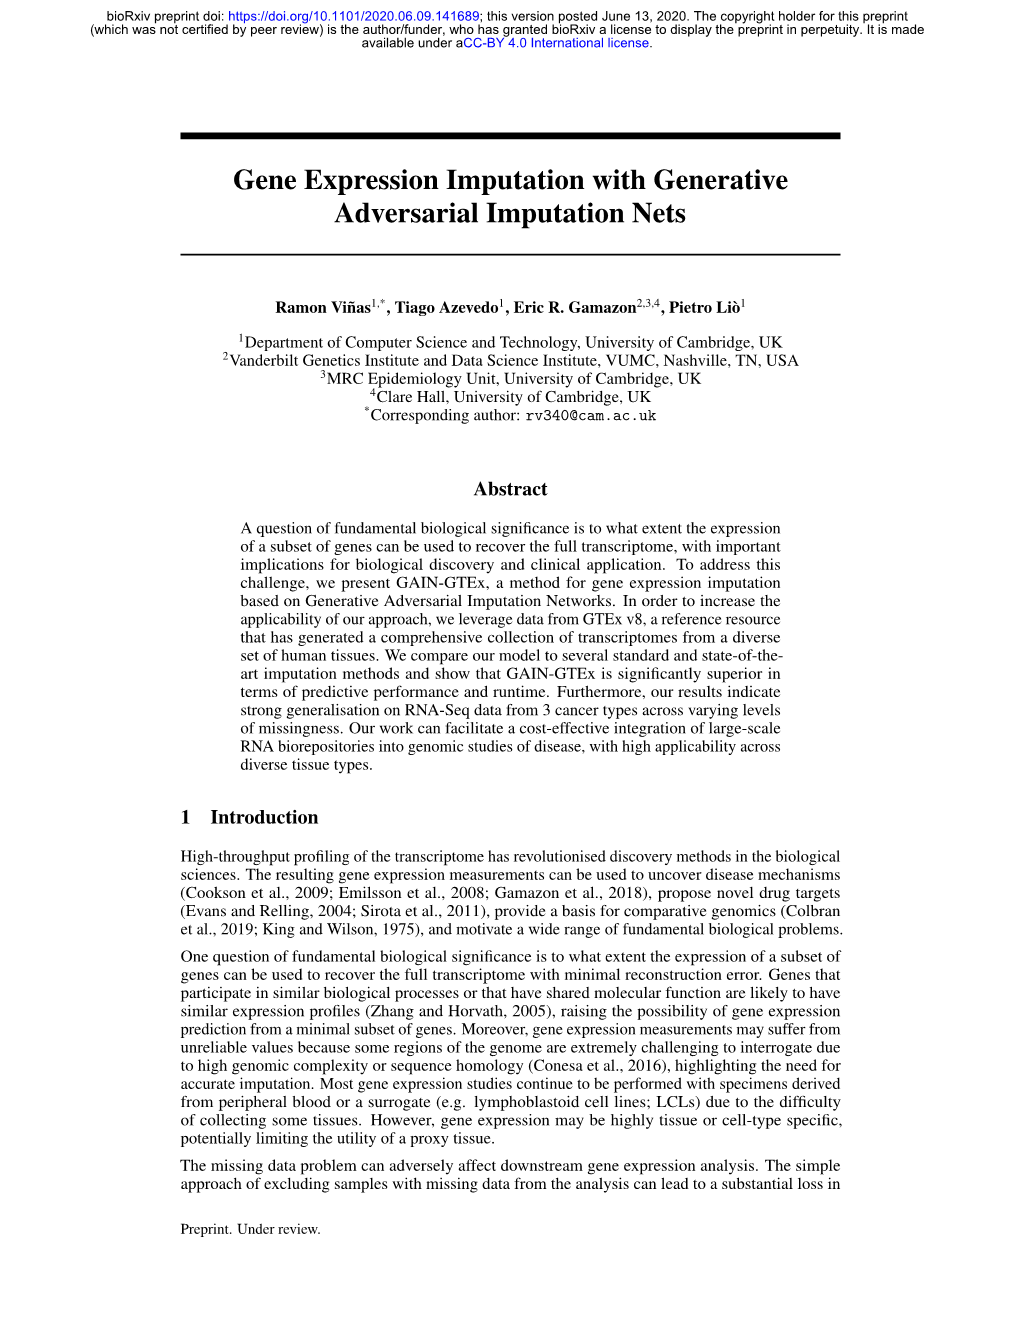 Gene Expression Imputation with Generative Adversarial Imputation Nets